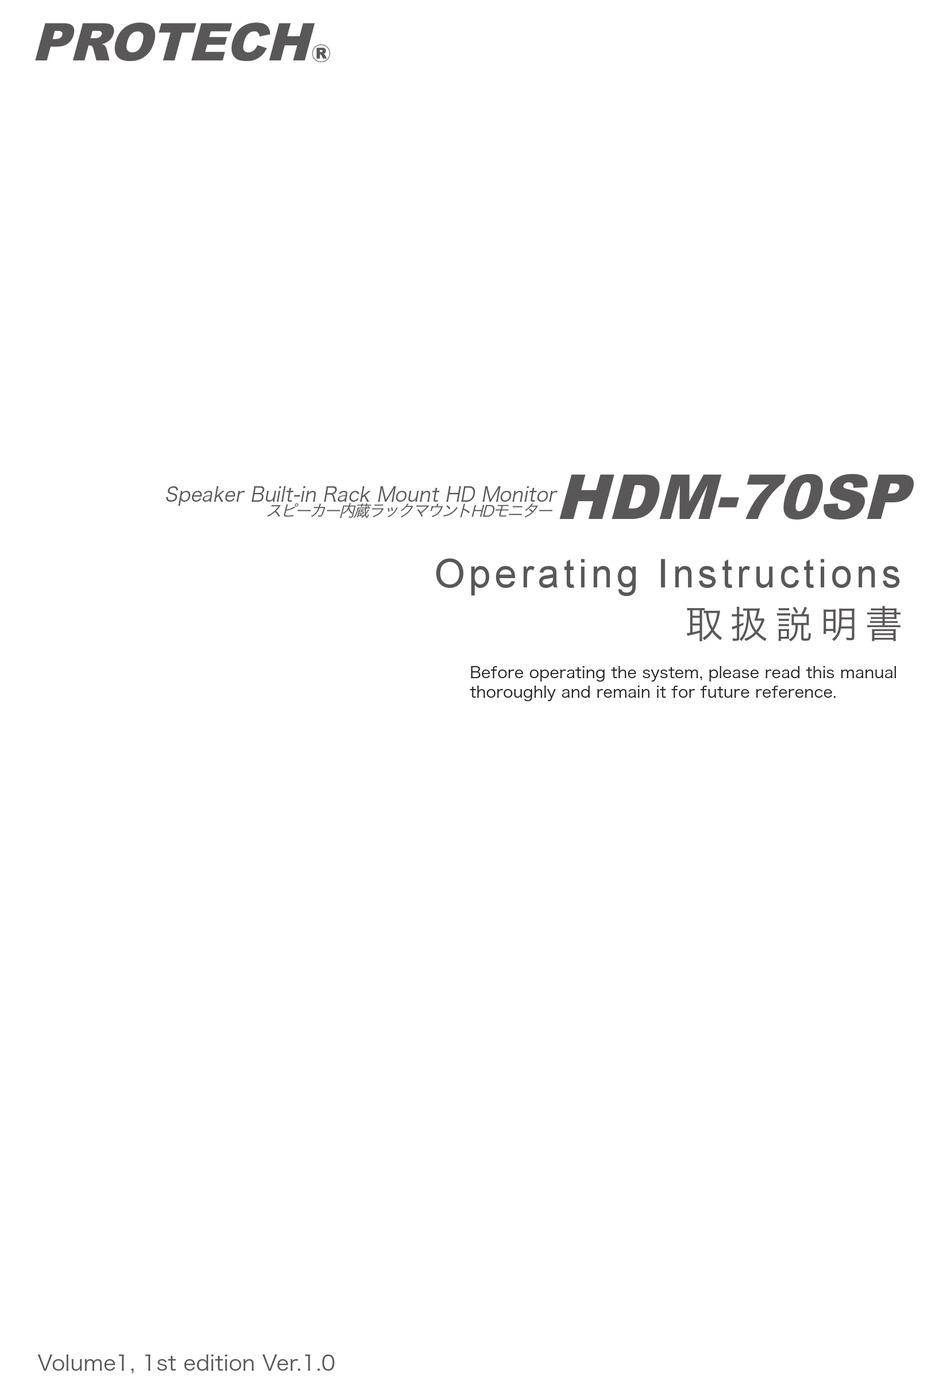 PROTECH HDM-70SP OPERATING INSTRUCTIONS MANUAL Pdf Download | ManualsLib